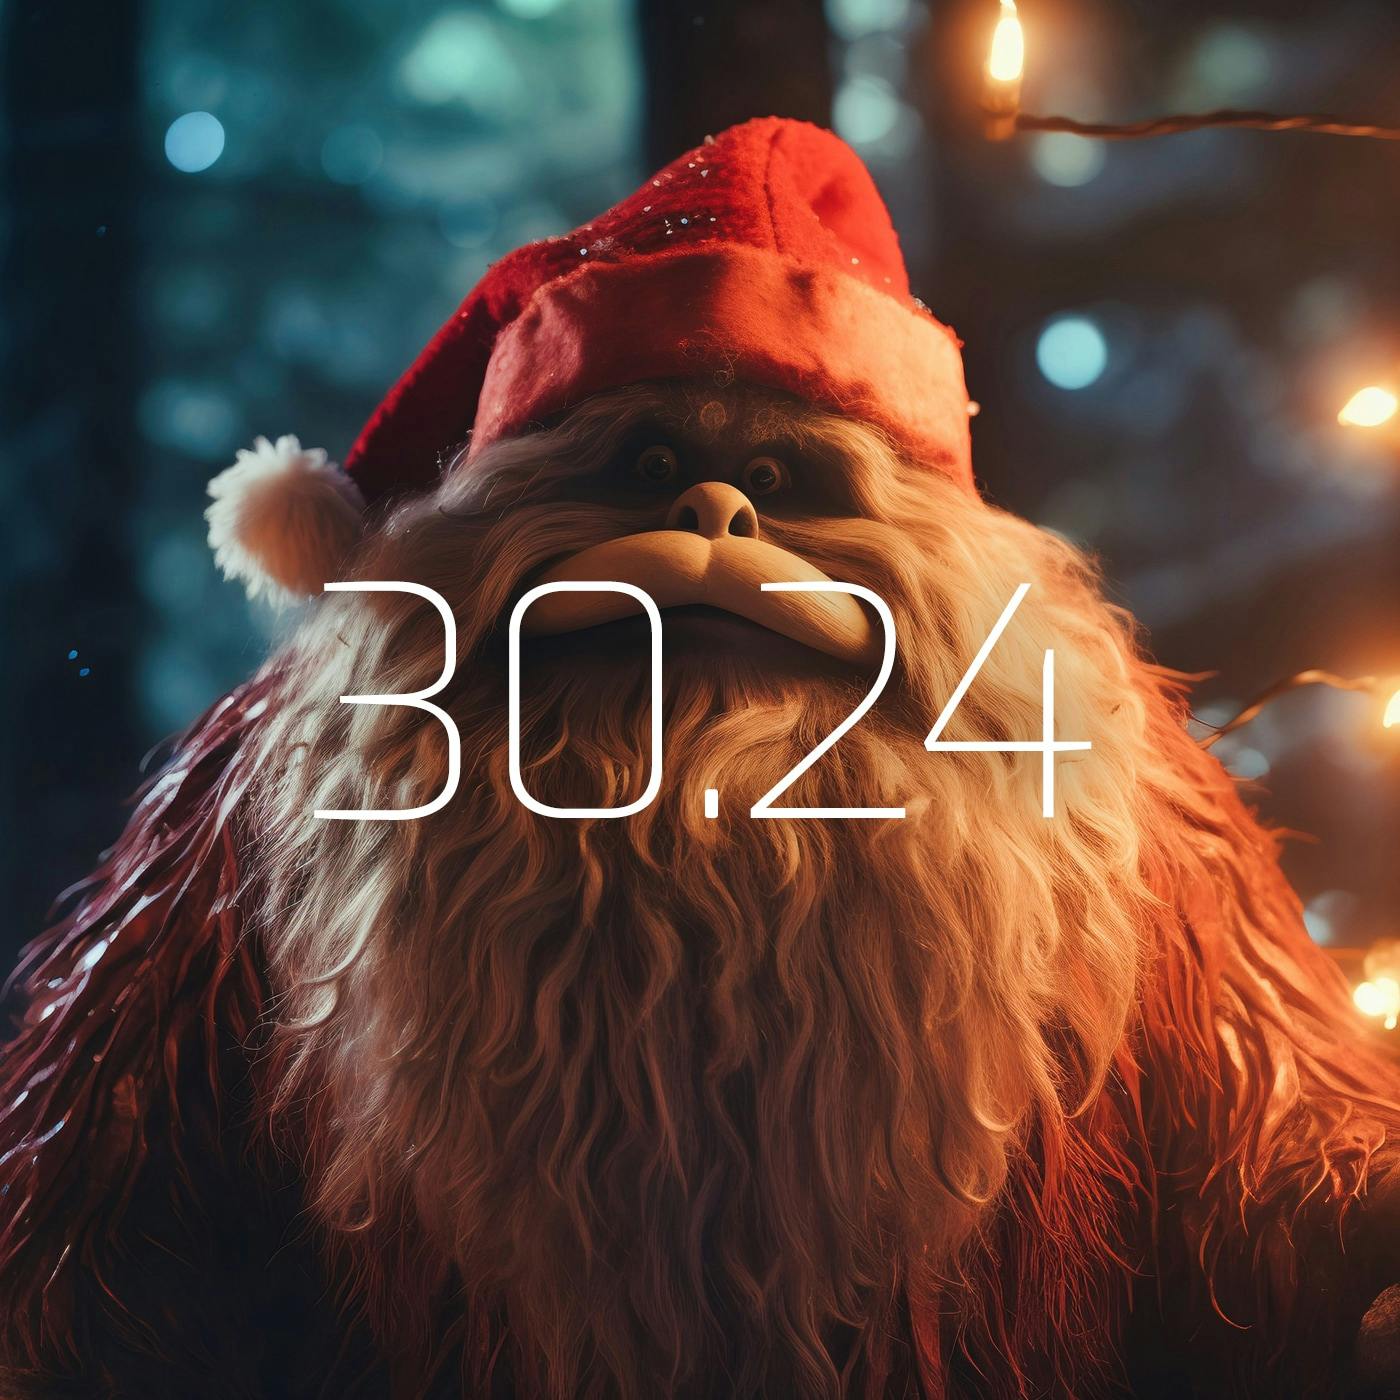 30.24 - MU Podcast - Christmas Creepers